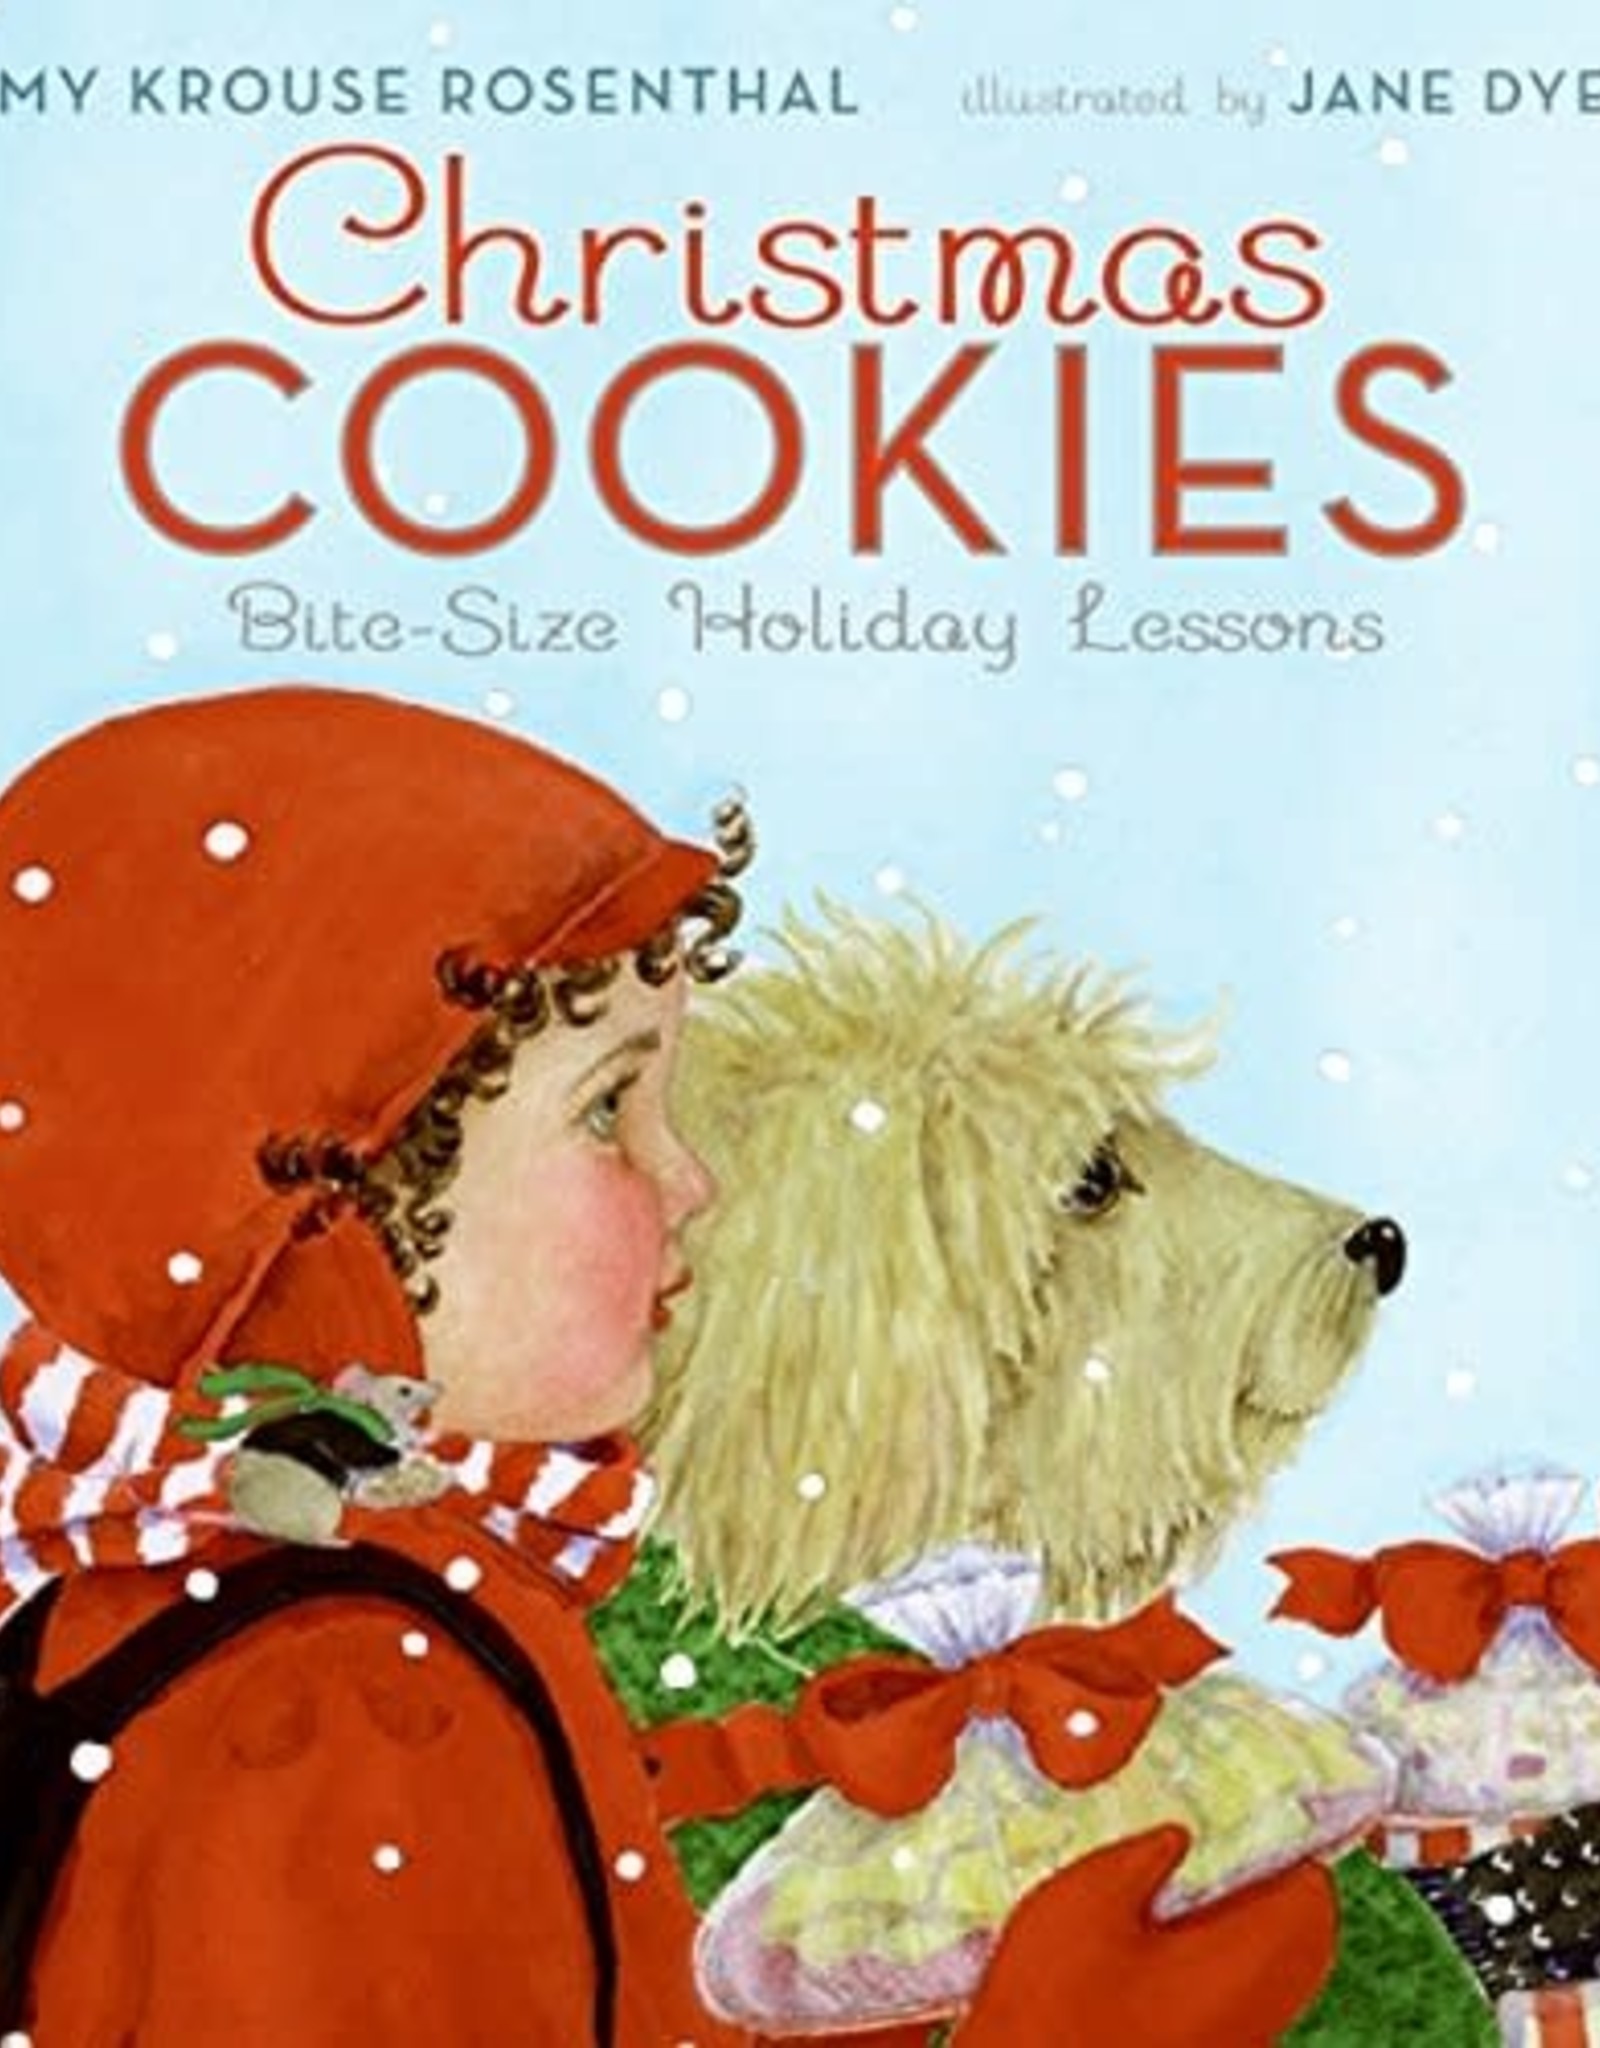 Harper Collins Christmas Cookies